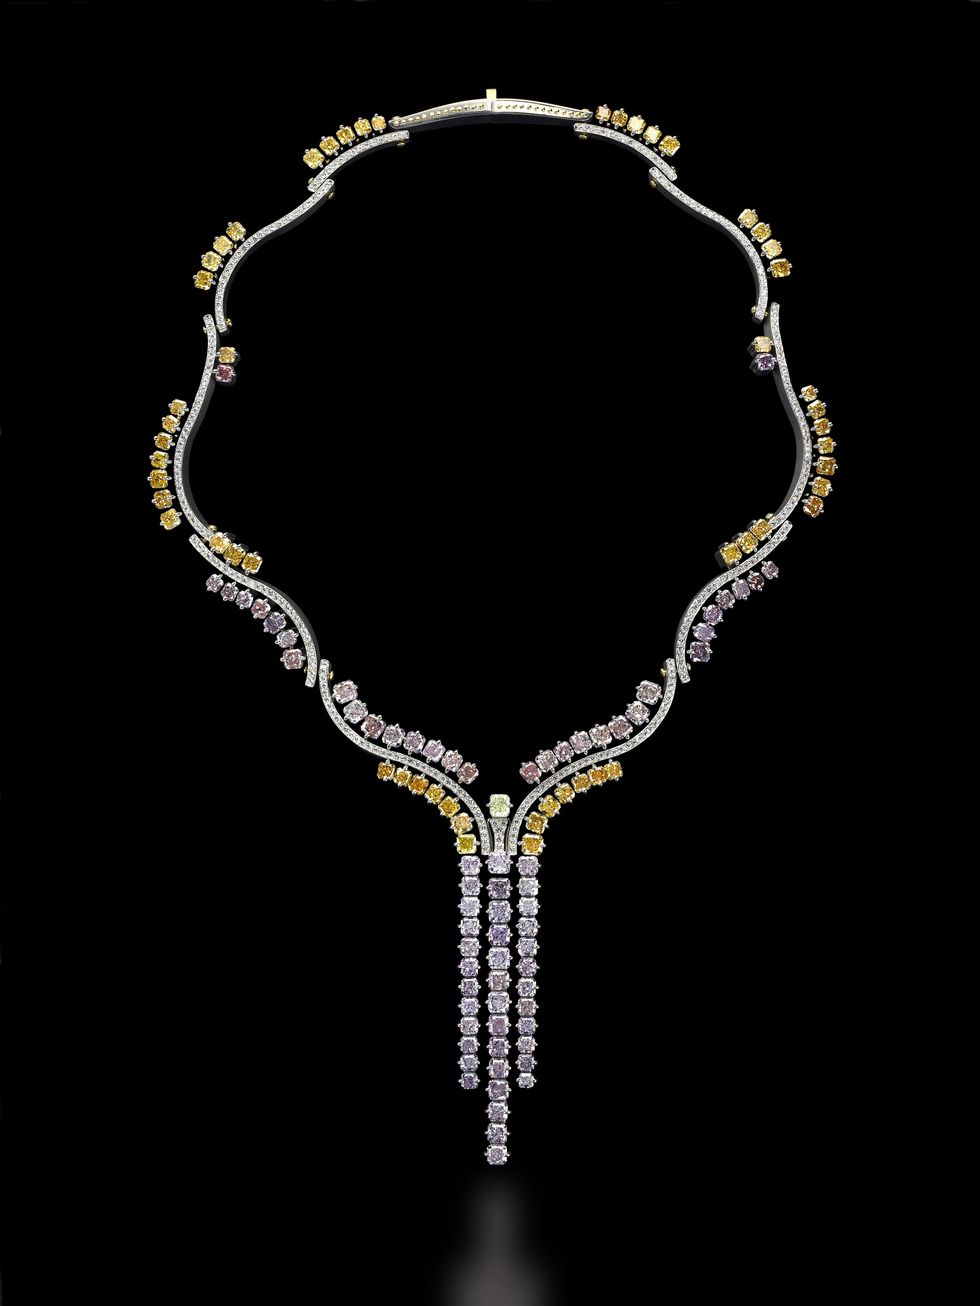 Necklace by Zoltan David